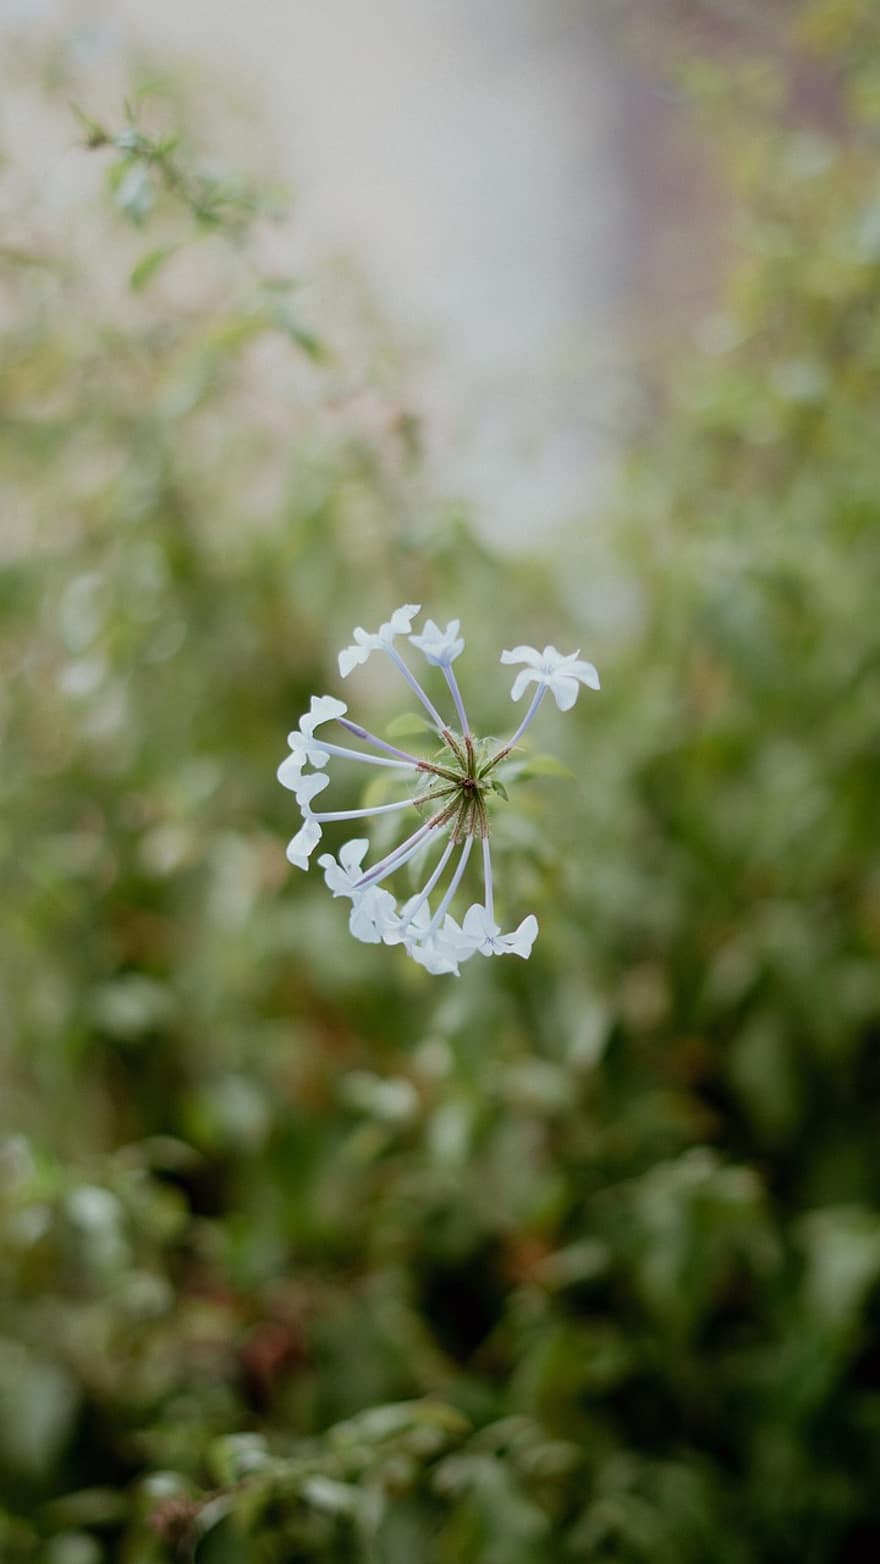 cape leadwort, bunga-bunga, menanam, bunga putih, kelopak, berkembang, alam